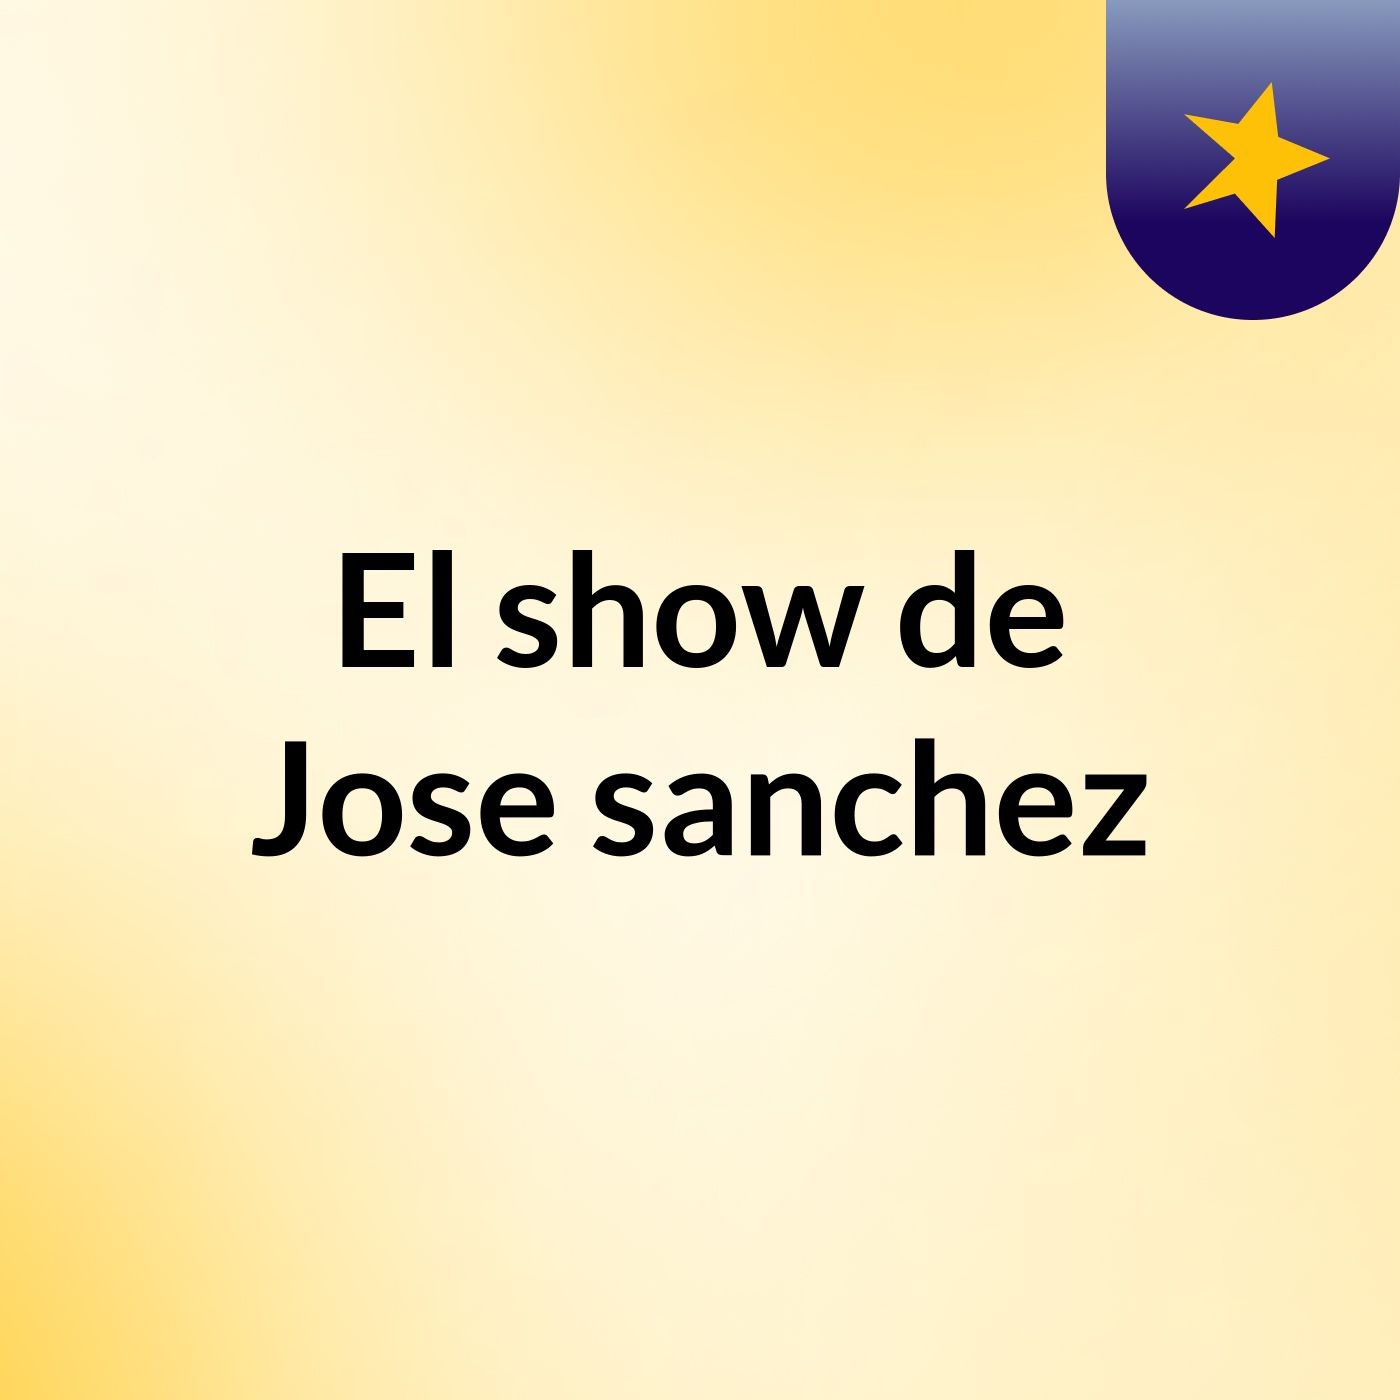 El show de Jose sanchez